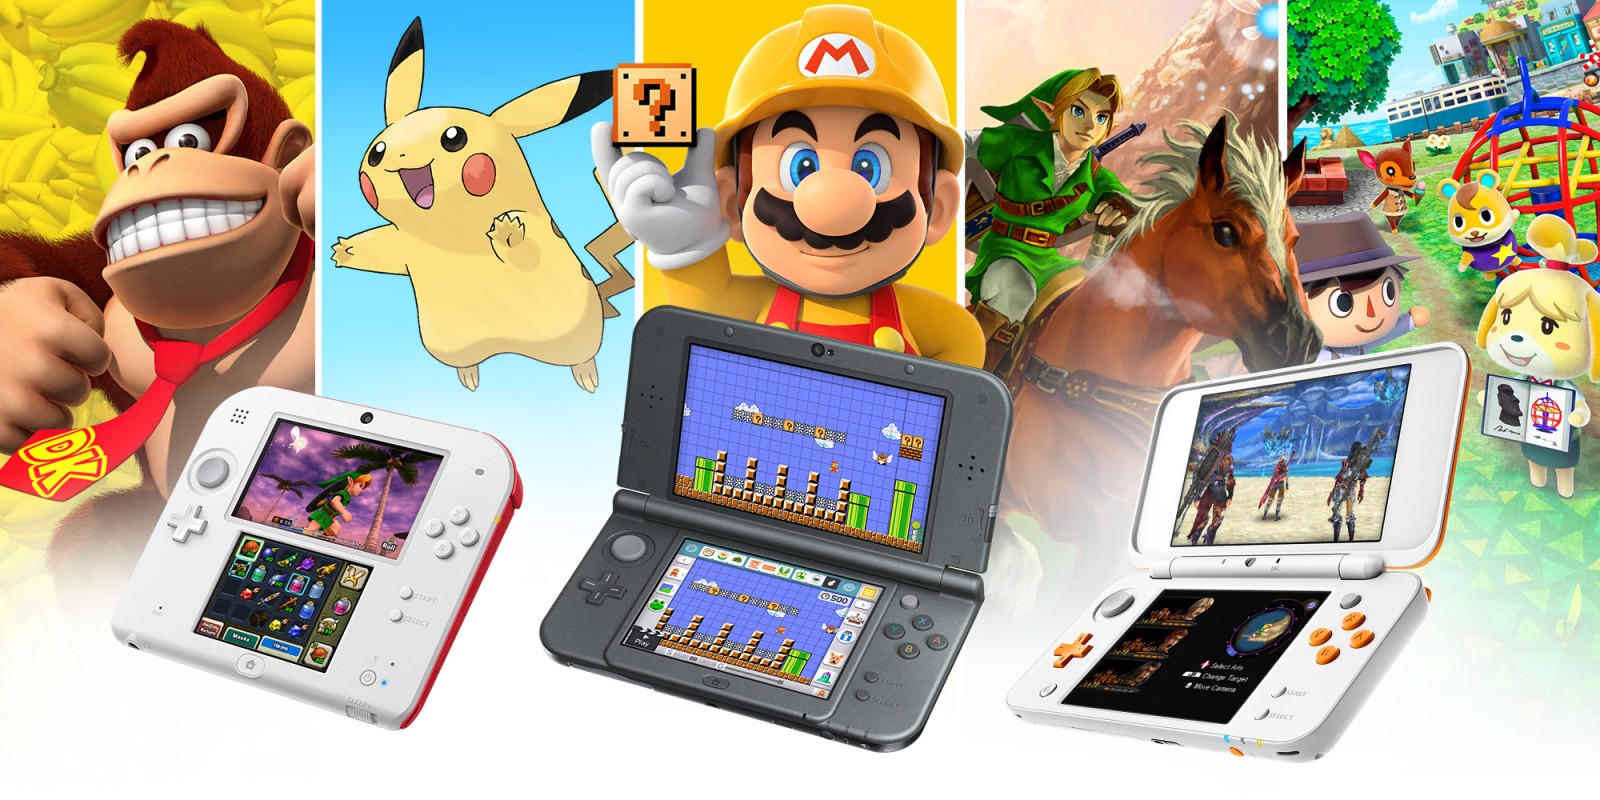 Jogos Nintendo 3ds - Pokemon, Mario, Kirby, Fire Emblem